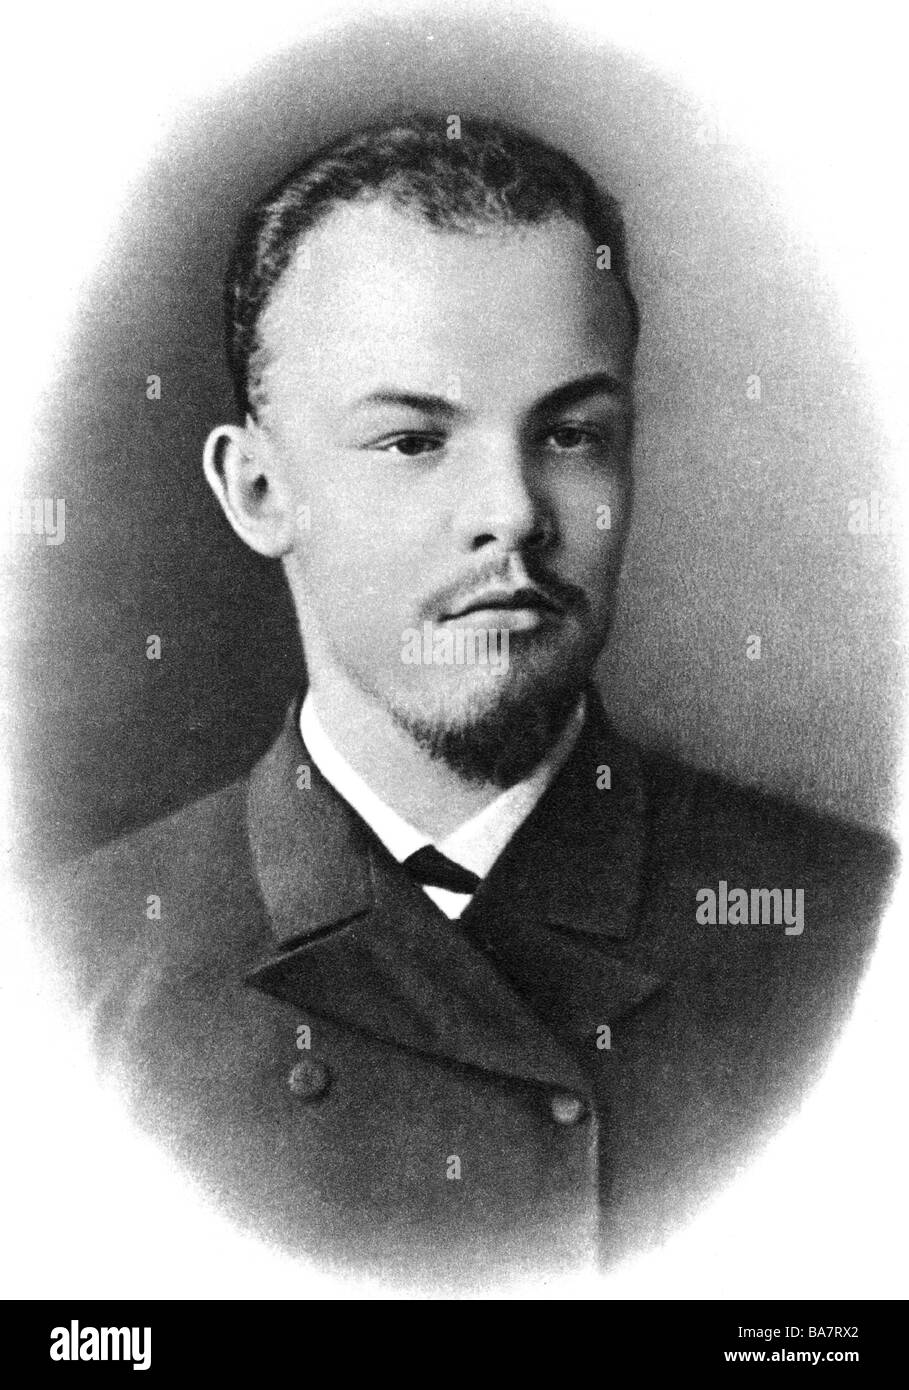 Lenin (Vladimir Ilyich Ulyanov), 22.4.1870 - 21.1.1924, Russian politician, as student, photo, circa 1890 / 1891, Stock Photo